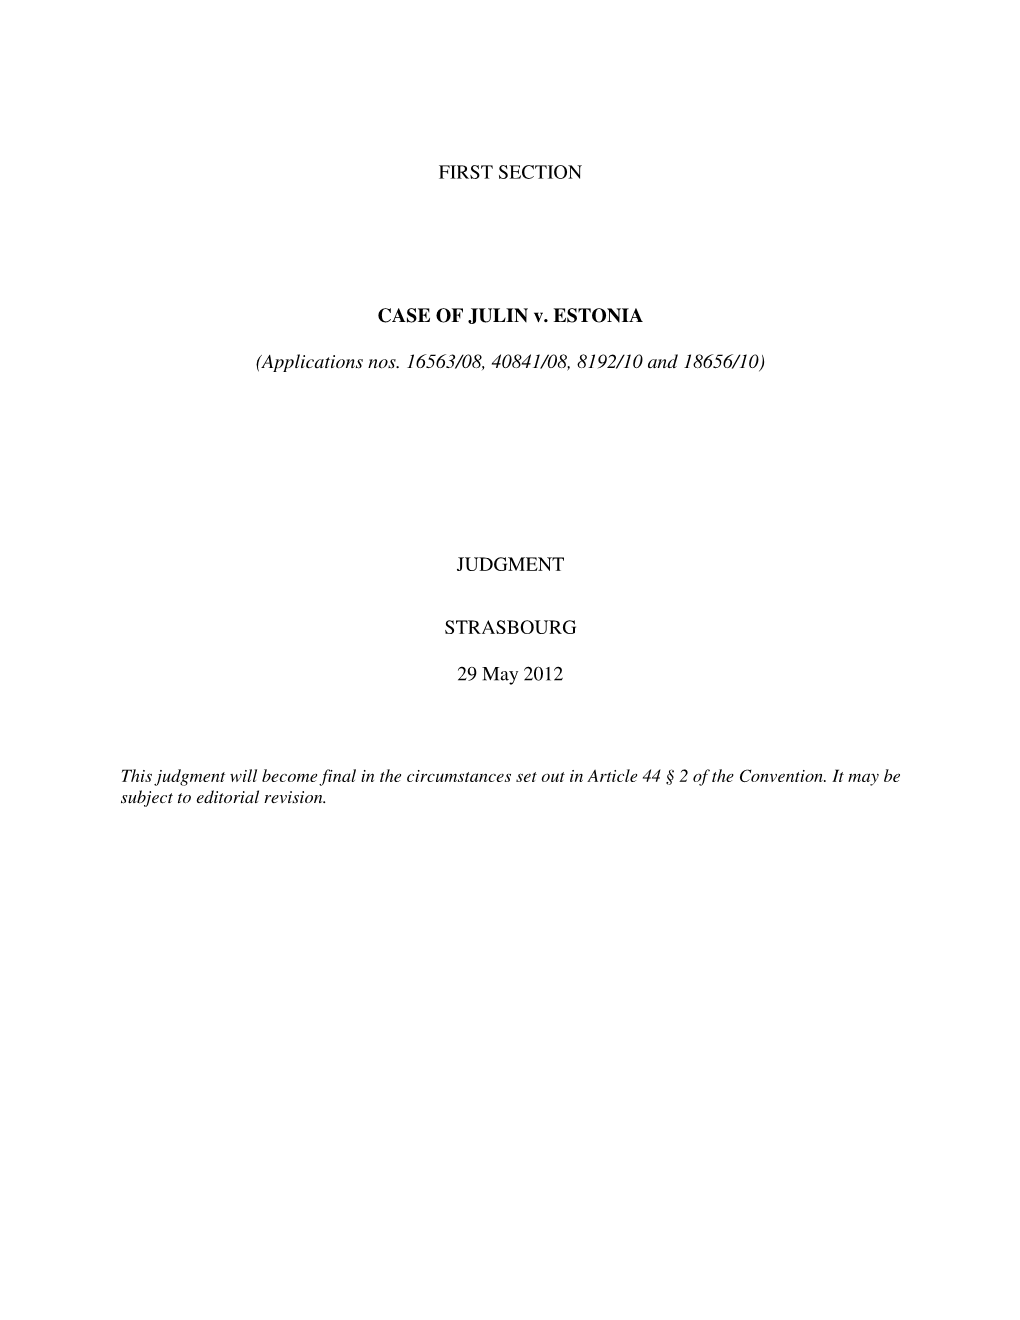 FIRST SECTION CASE of JULIN V. ESTONIA (Applications Nos. 16563